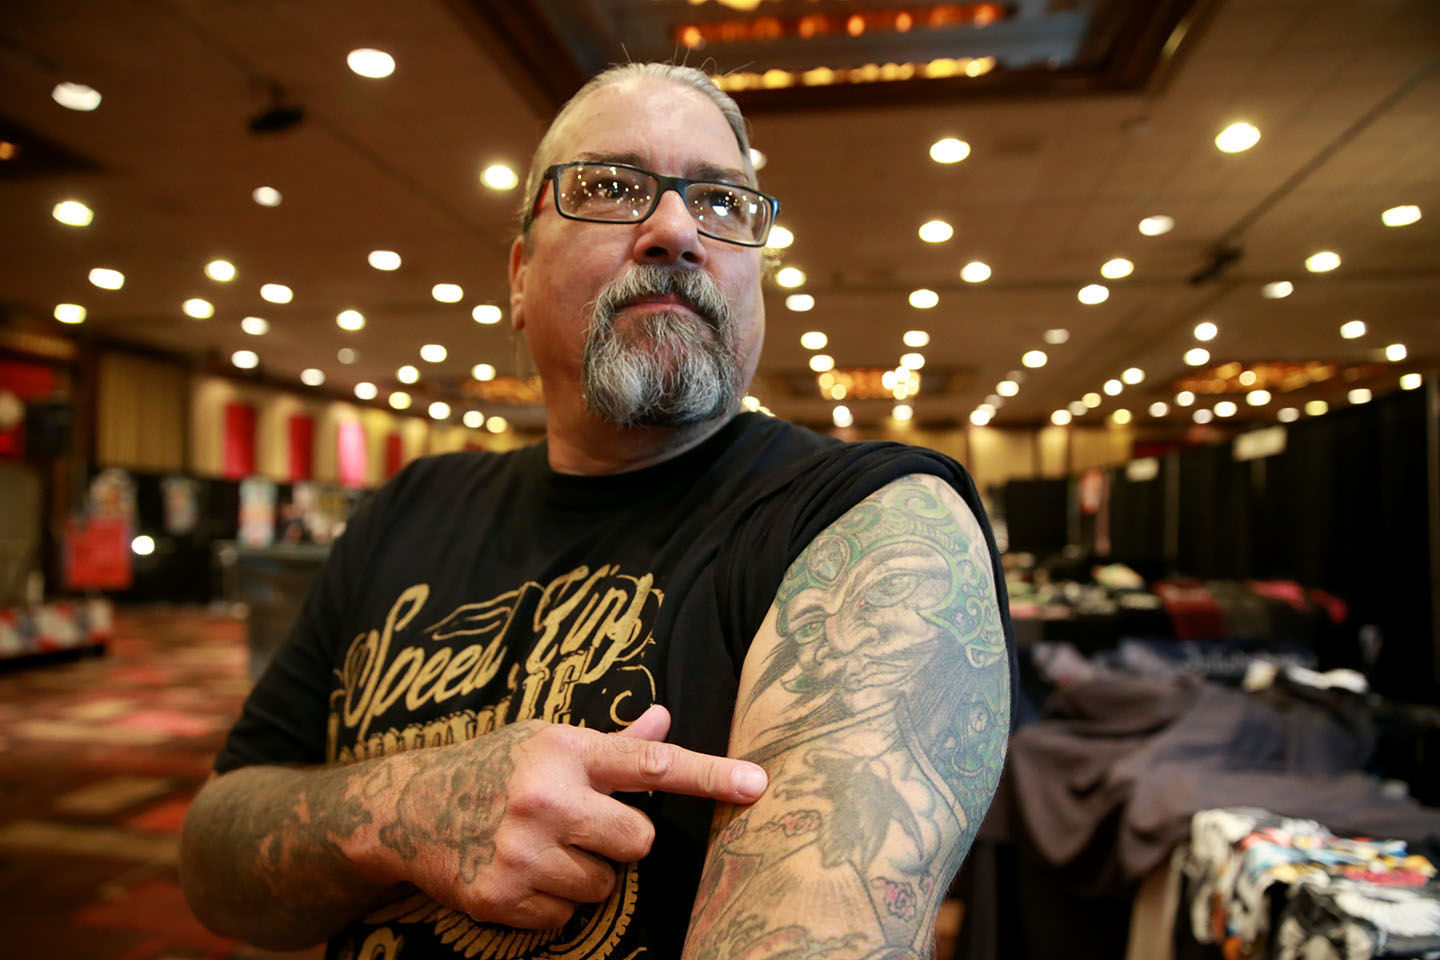 Tattoo artists describe their memories of their first tattoos